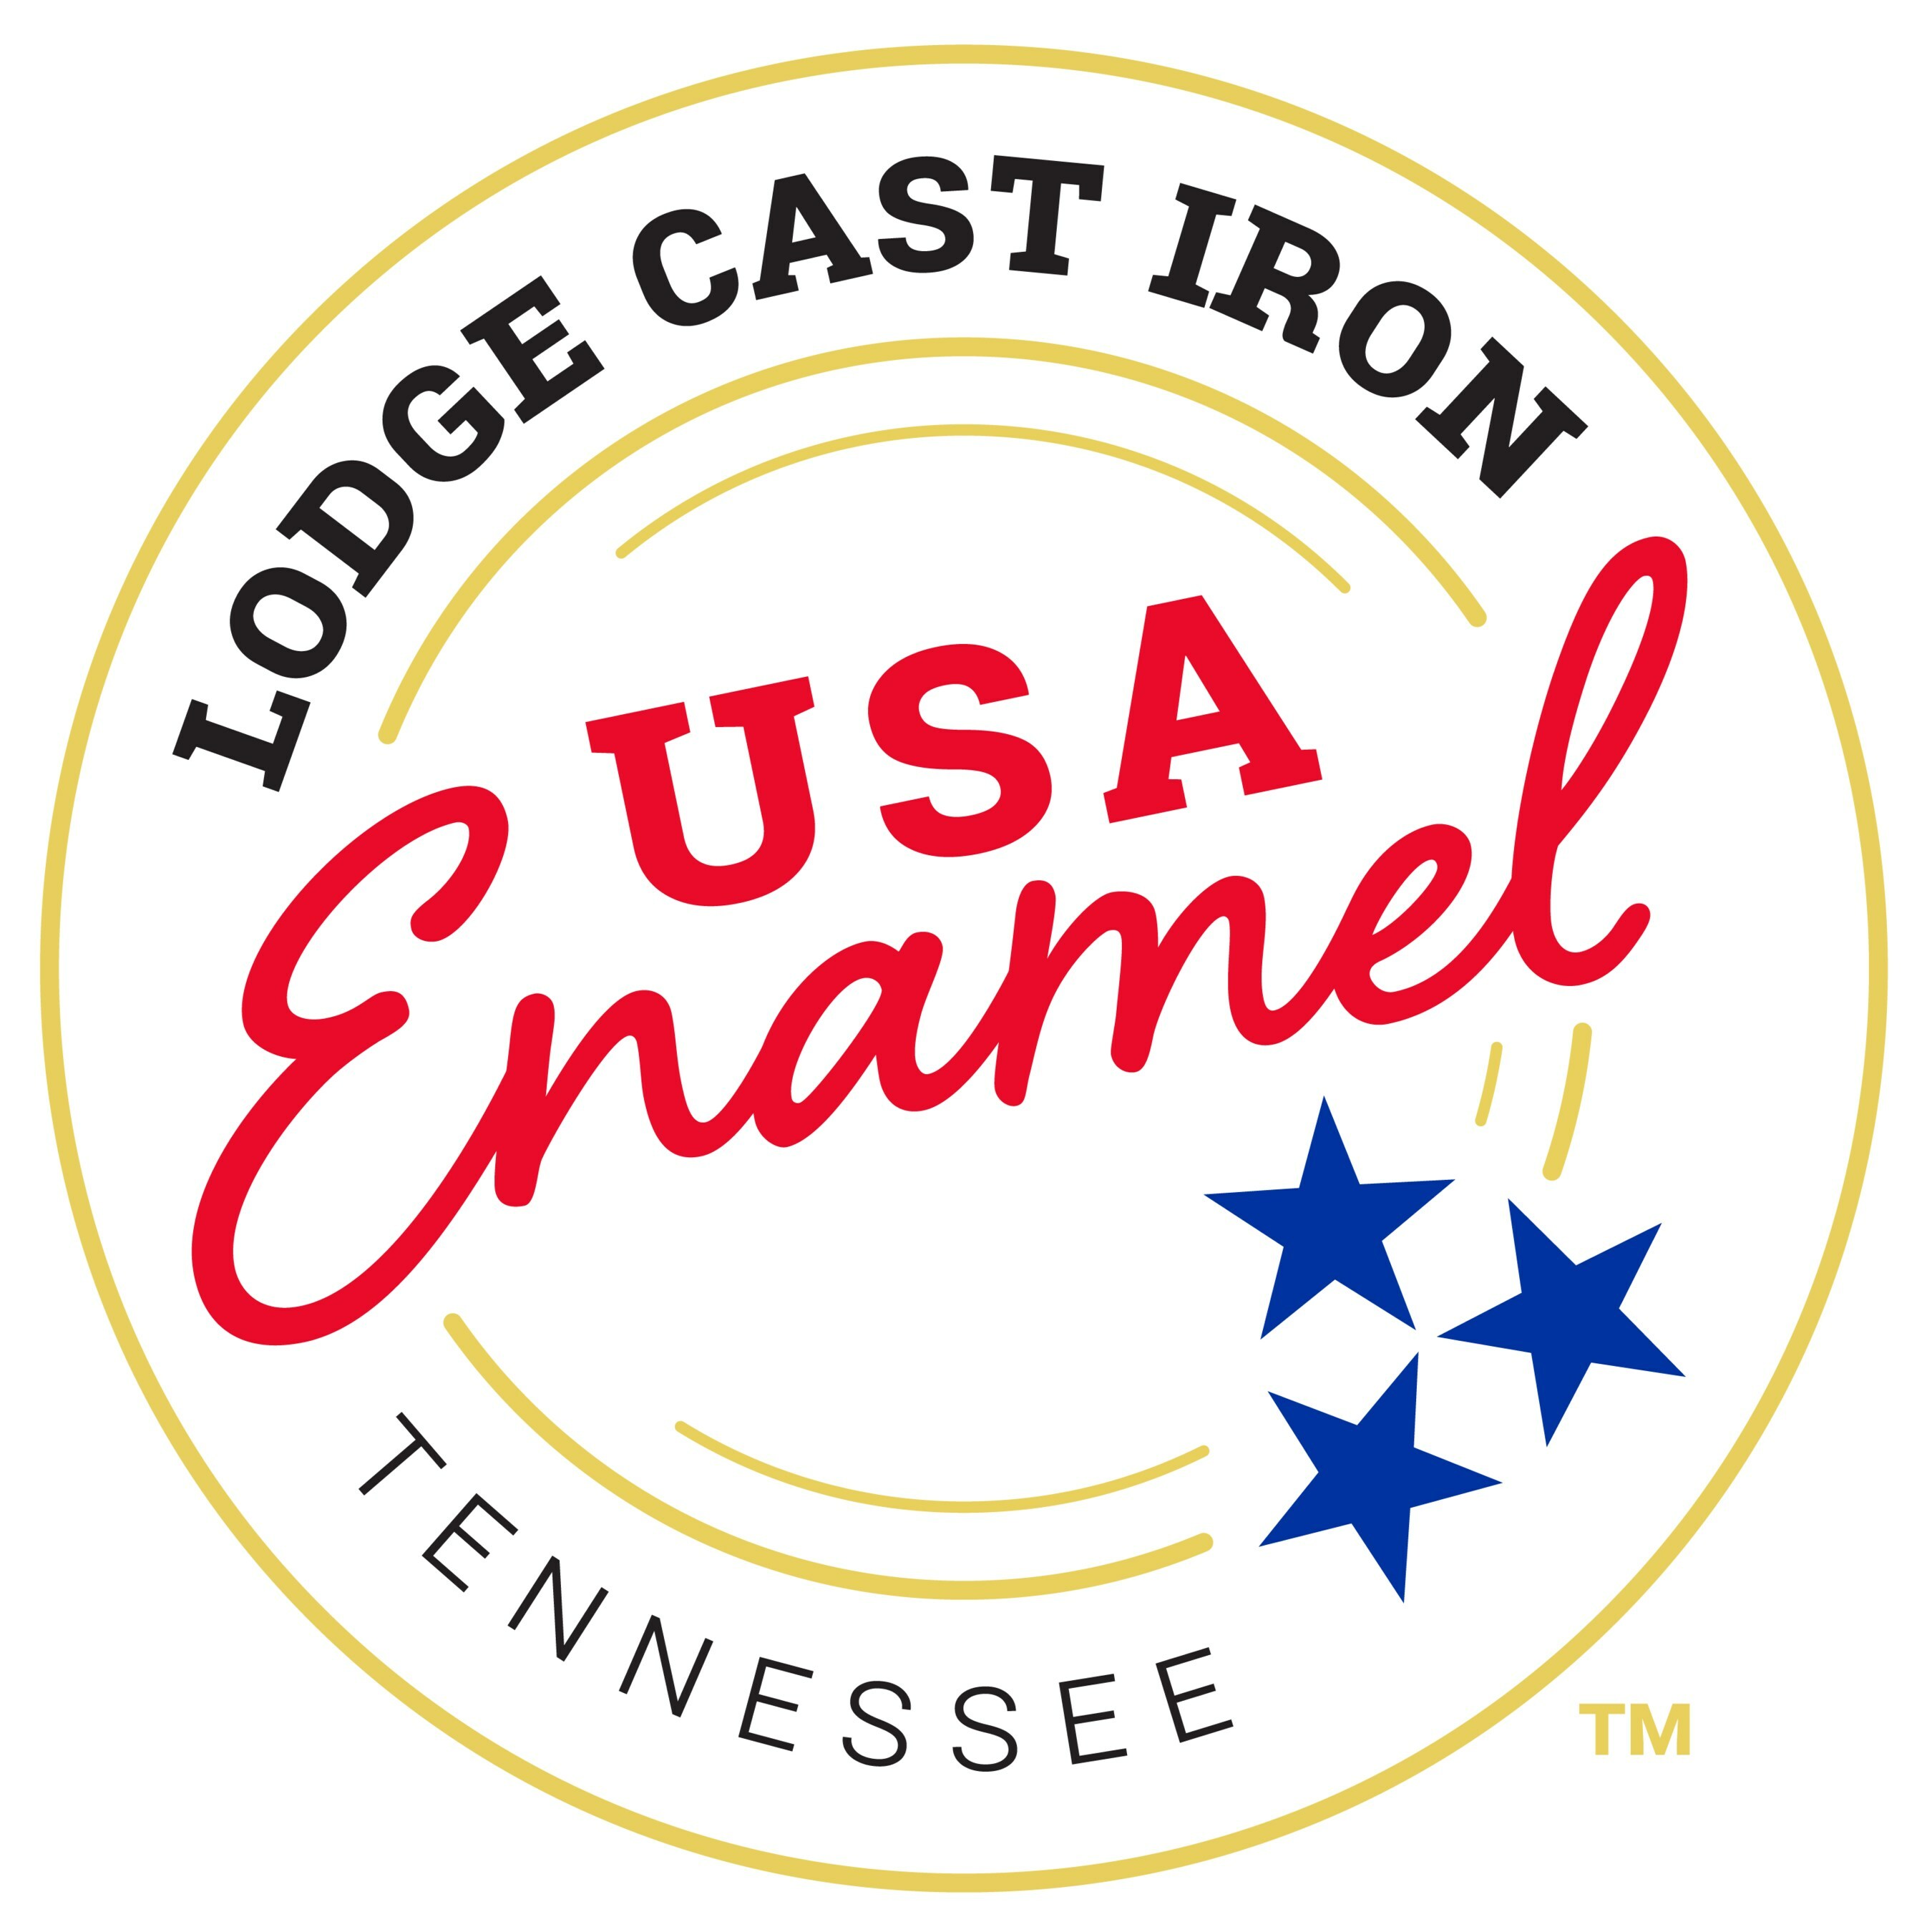 https://mma.prnewswire.com/media/2097352/USA_ENAMEL_Logo.jpg?p=publish